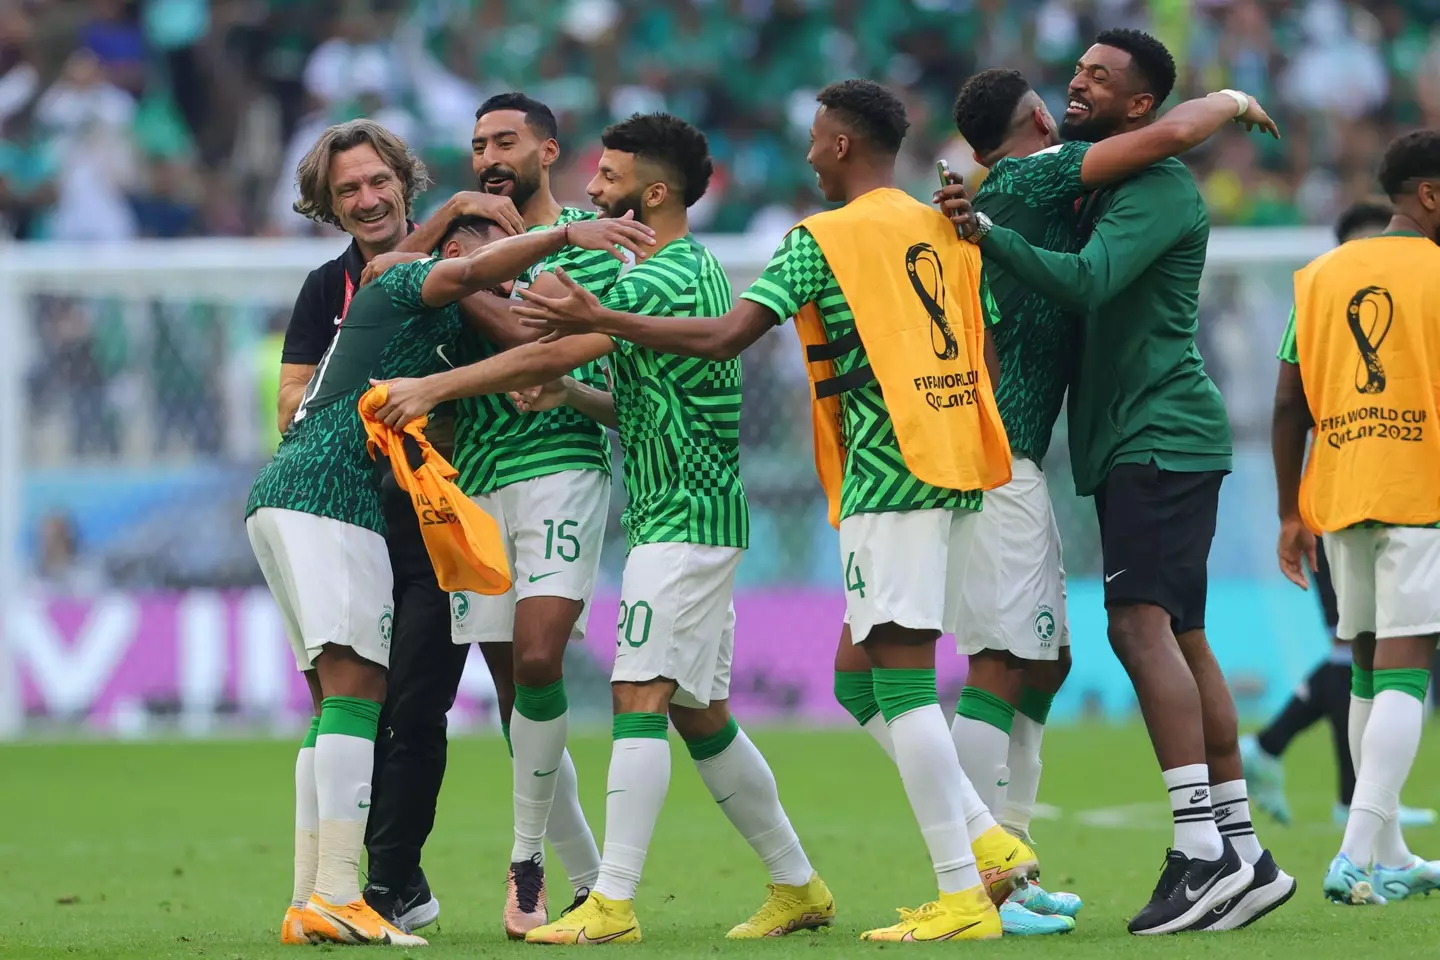 Saudi Arabia players celebrate their victory. (Image